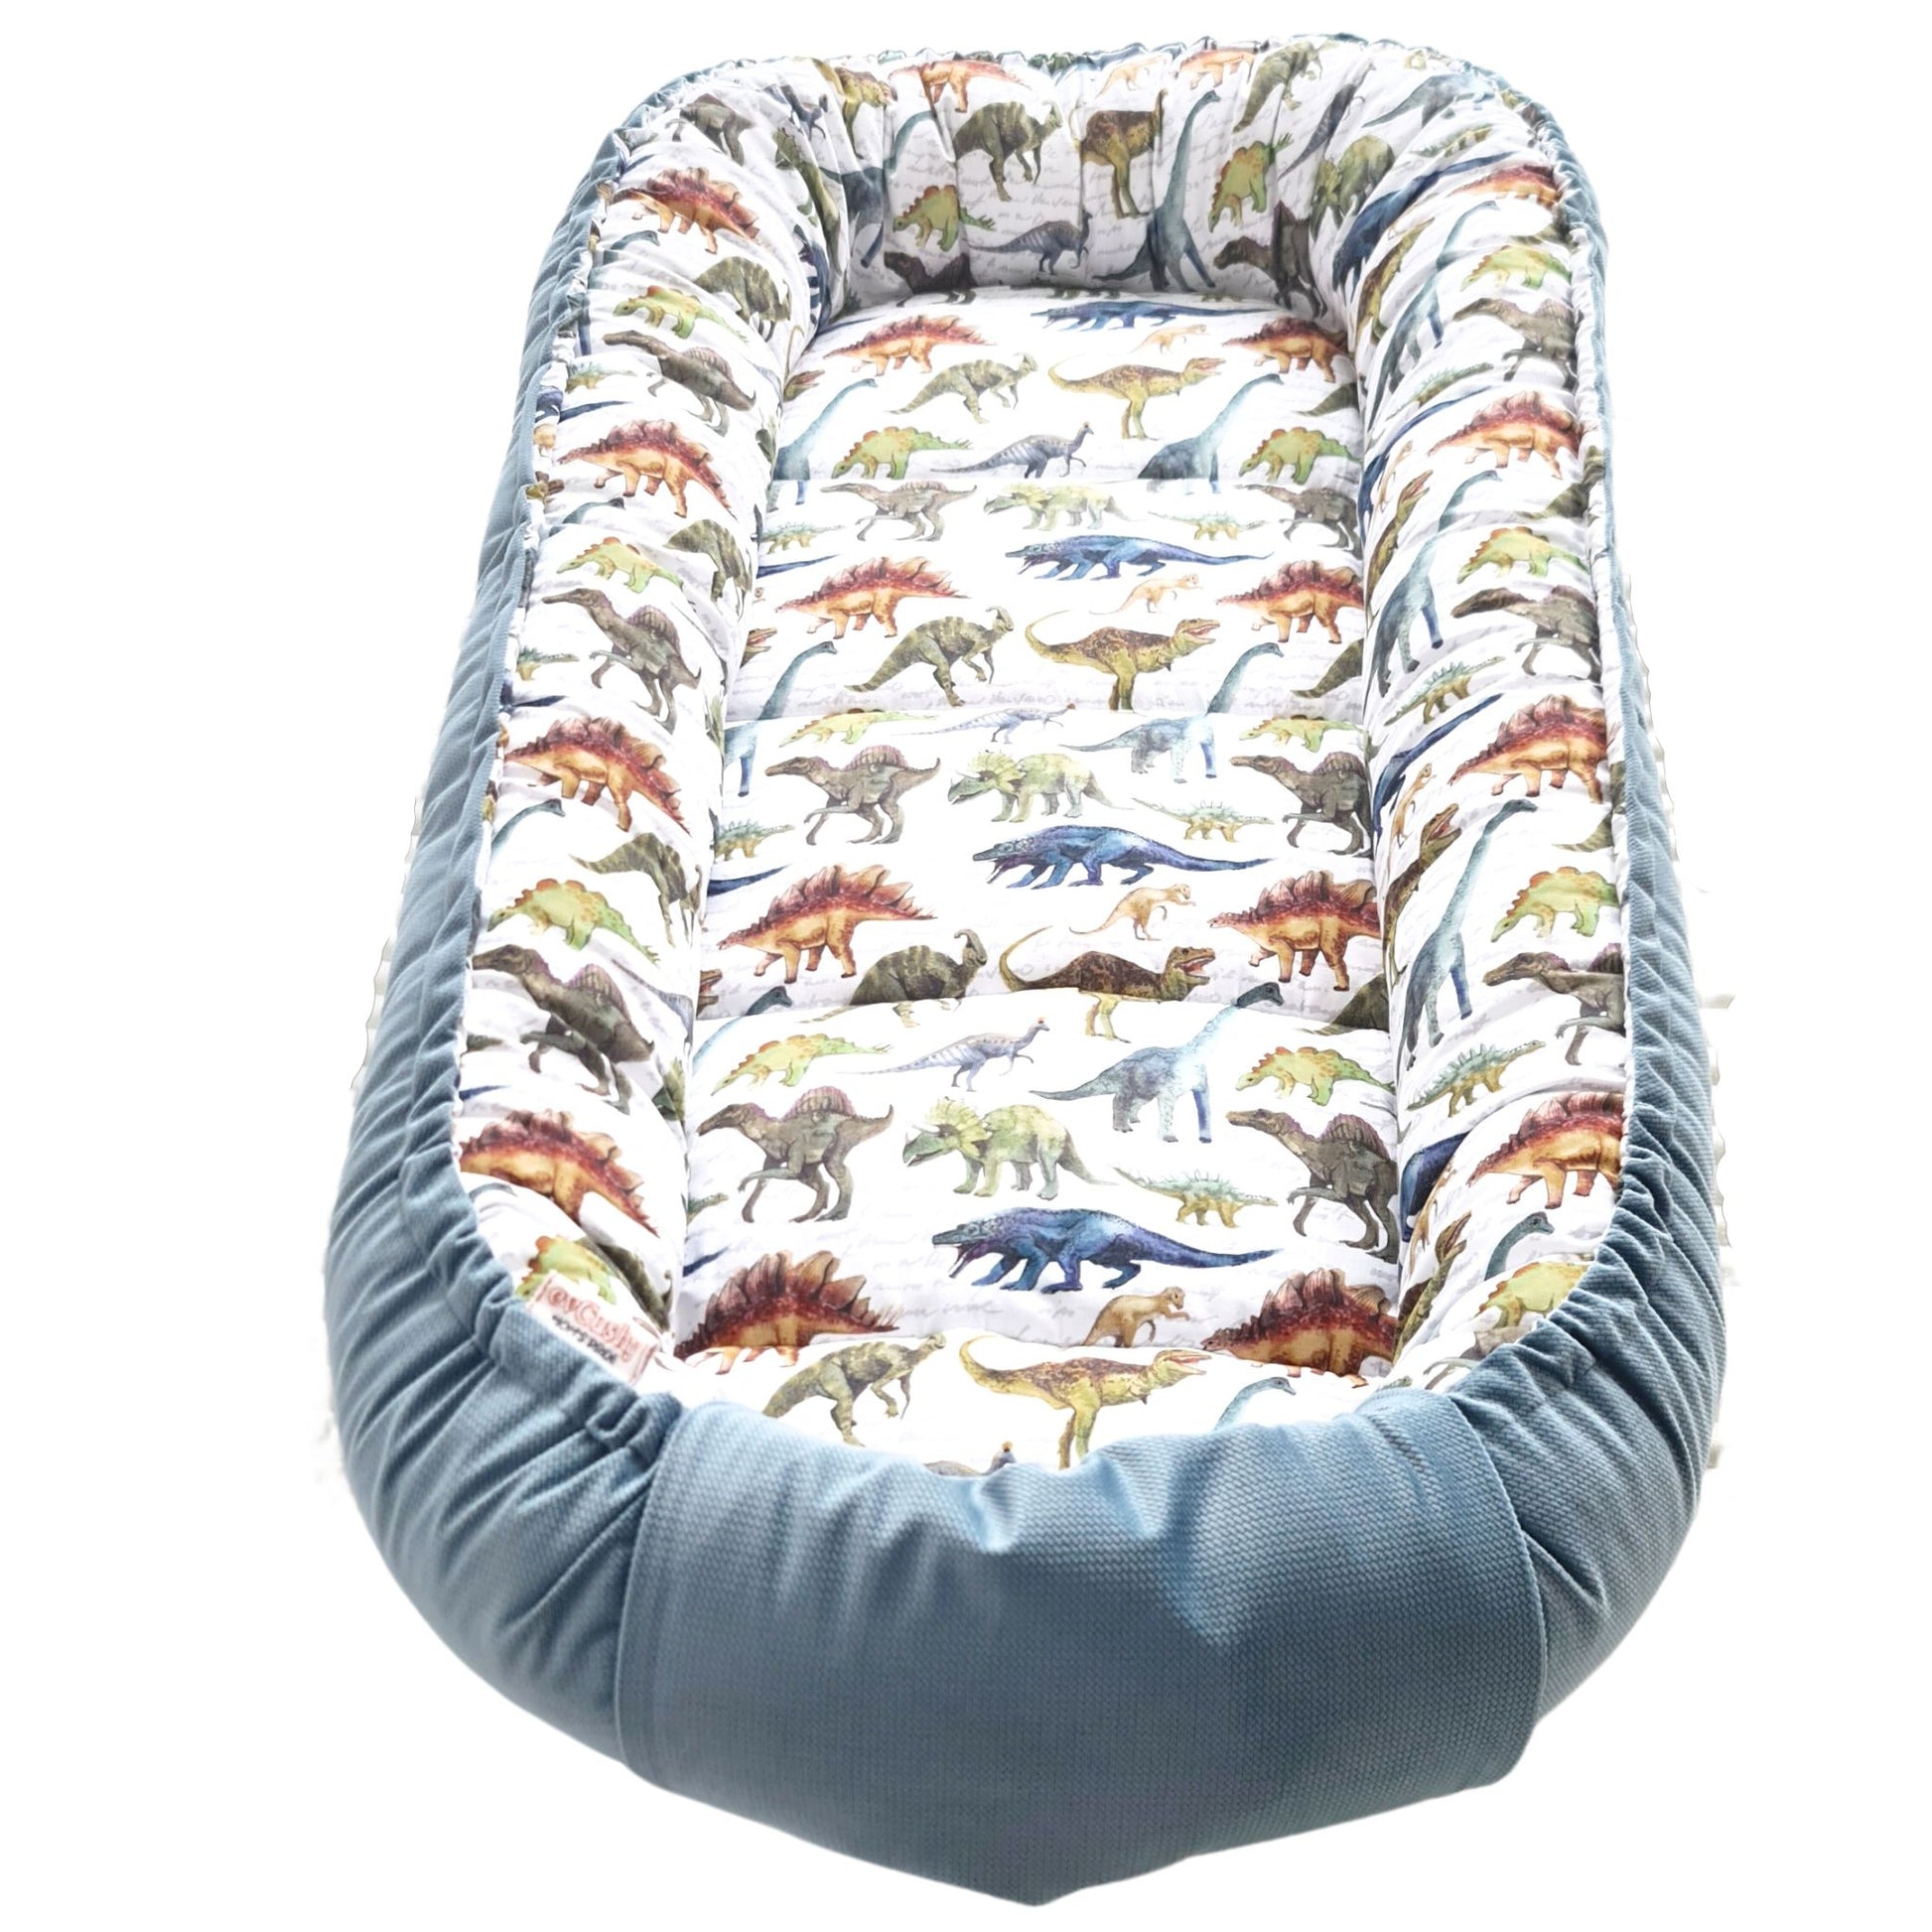 baby nest sleeping pod for toddlers XXl size dinosours pattern  sage green velvet on the bottom